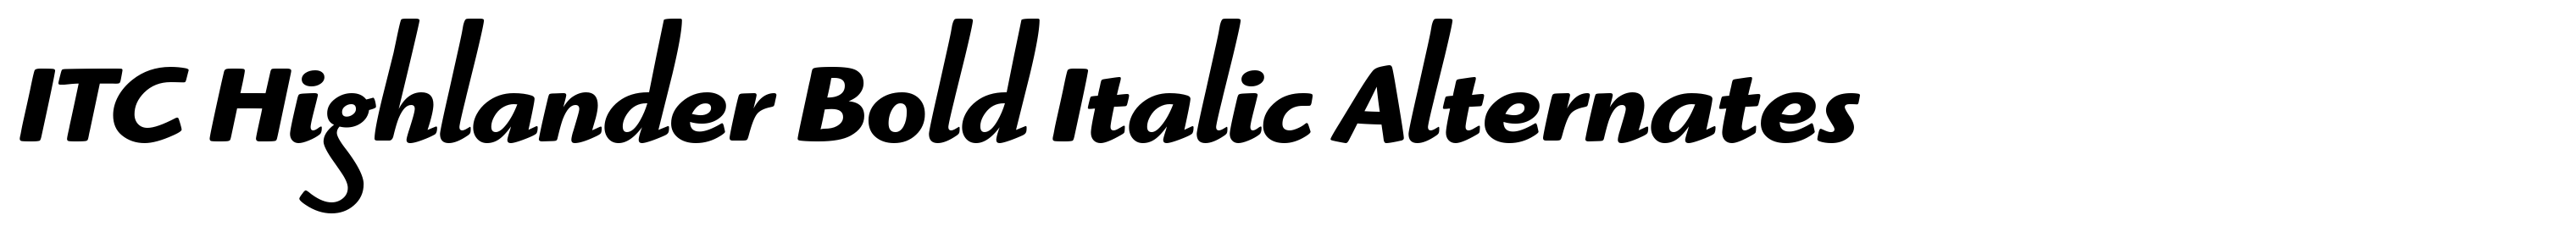 ITC Highlander Bold Italic Alternates